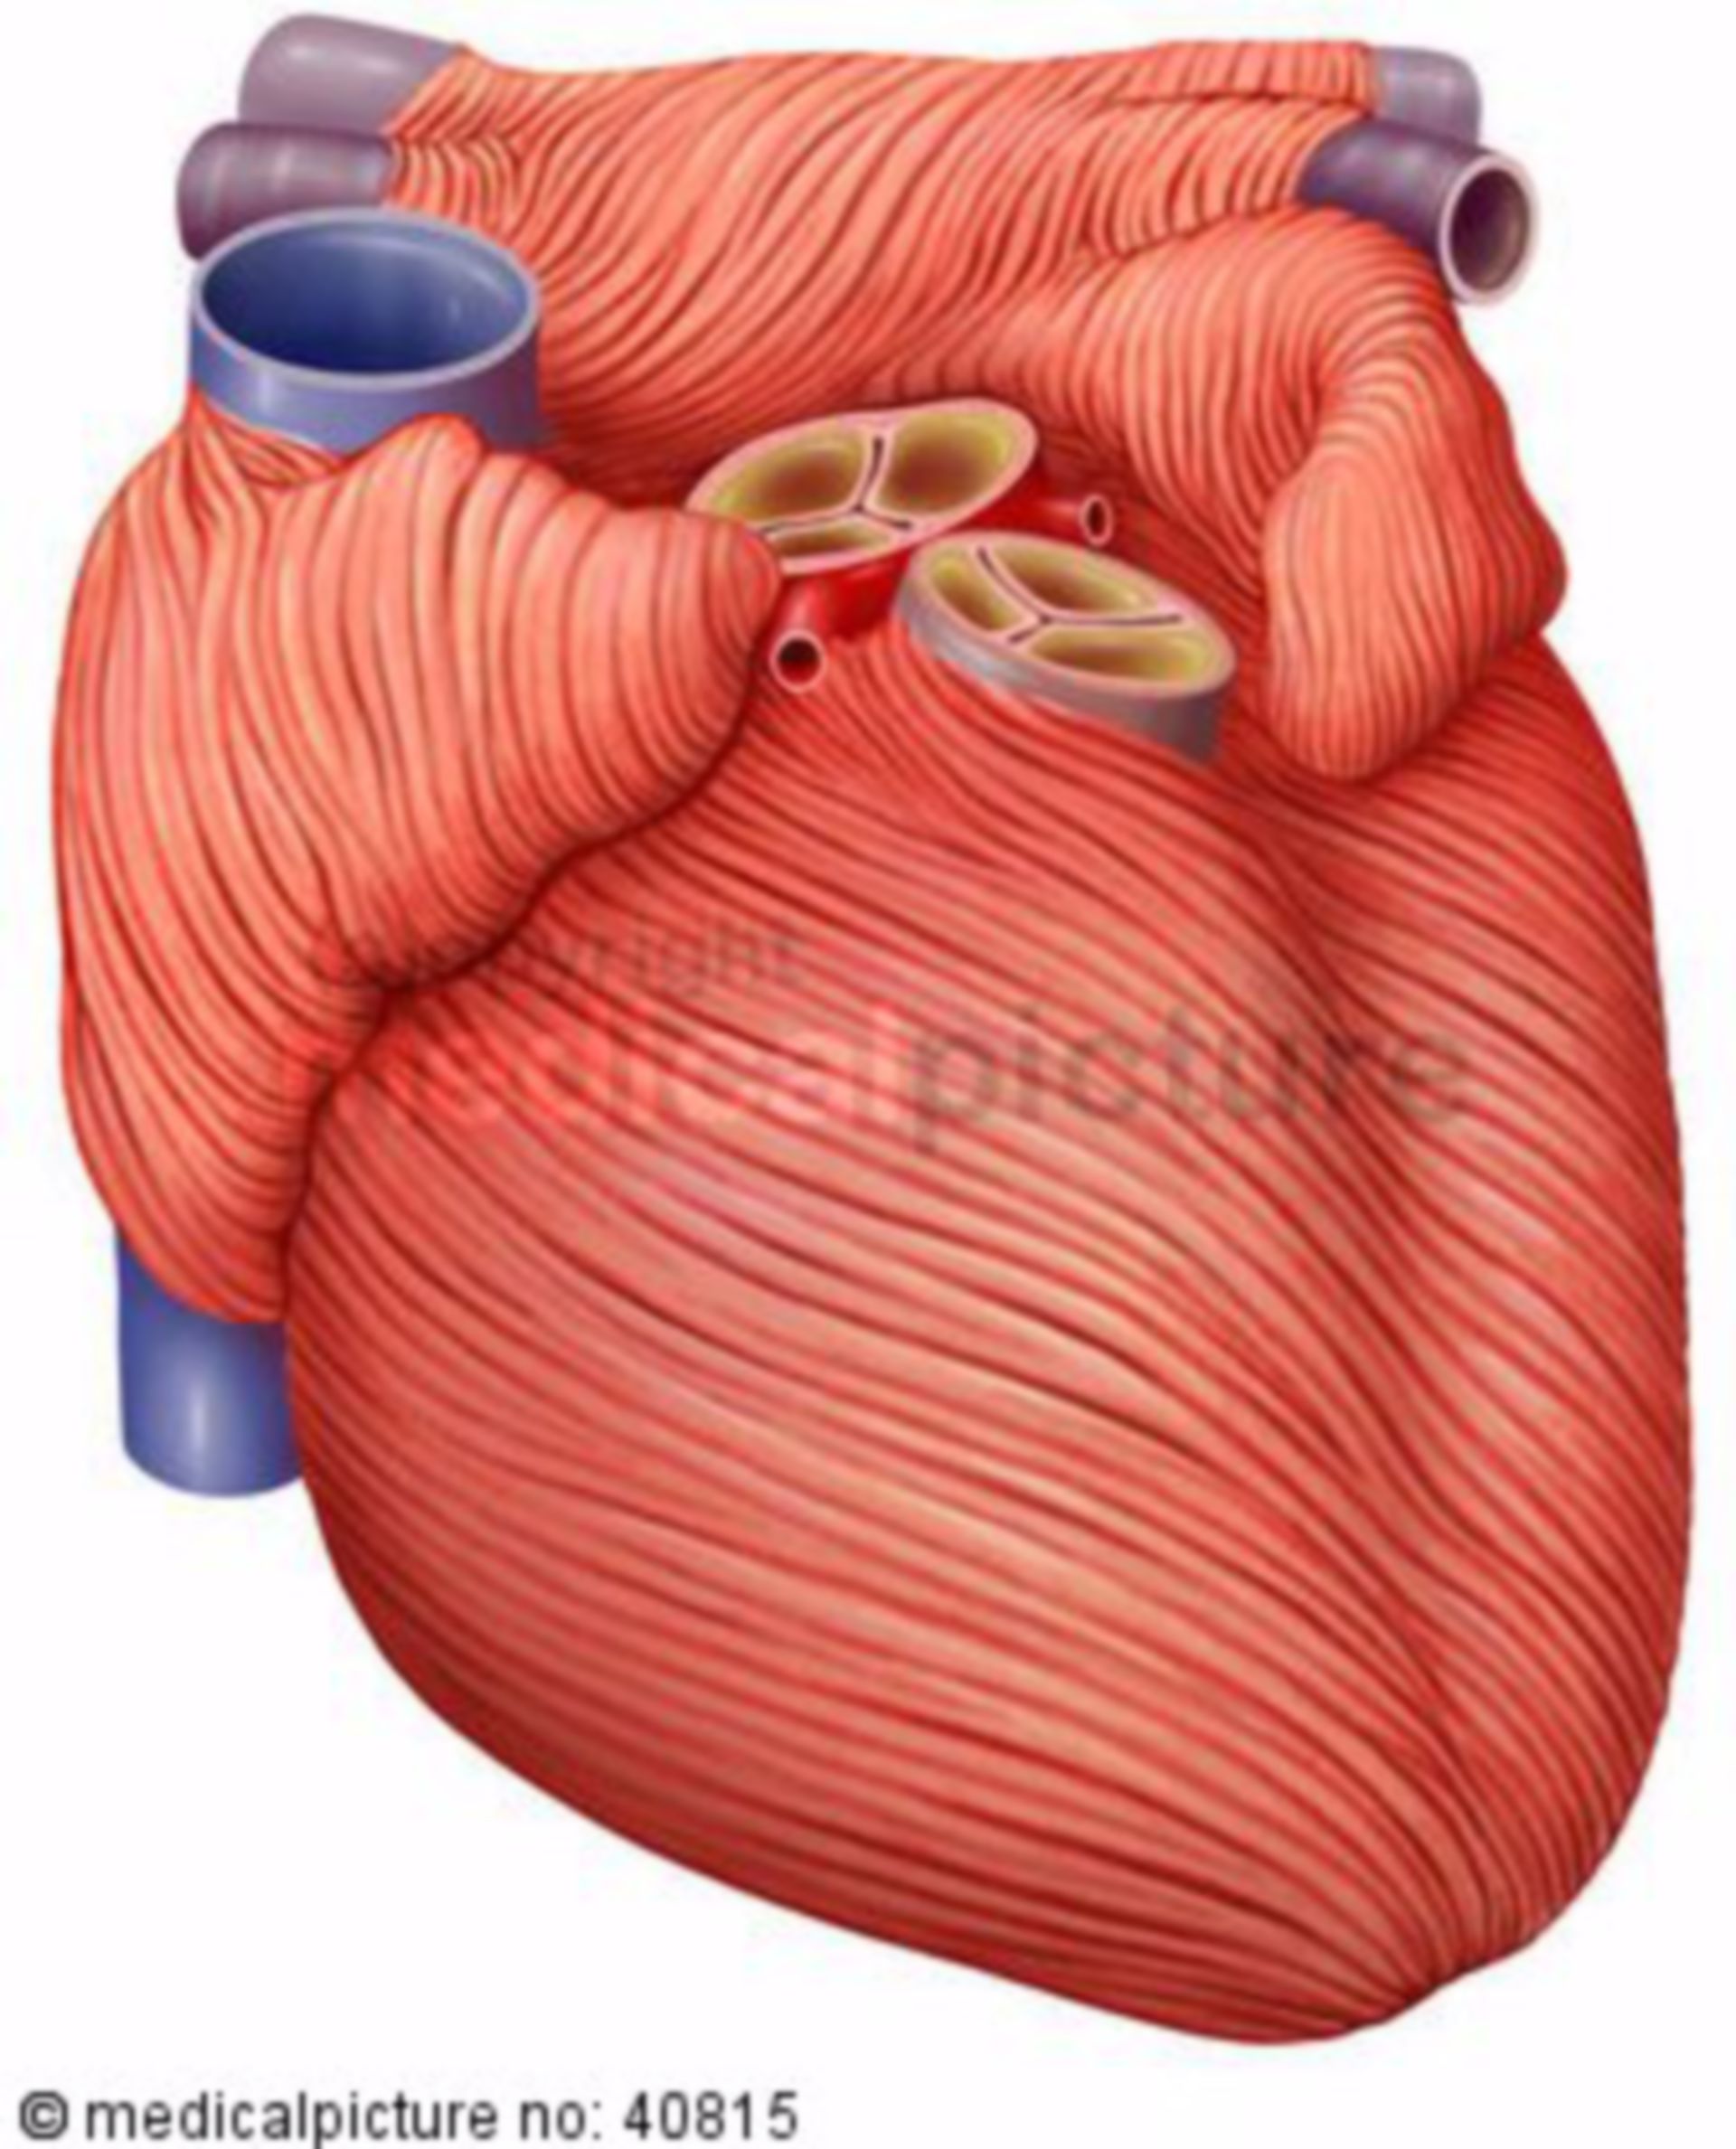  Herzmuskulatur, Myocardium 
